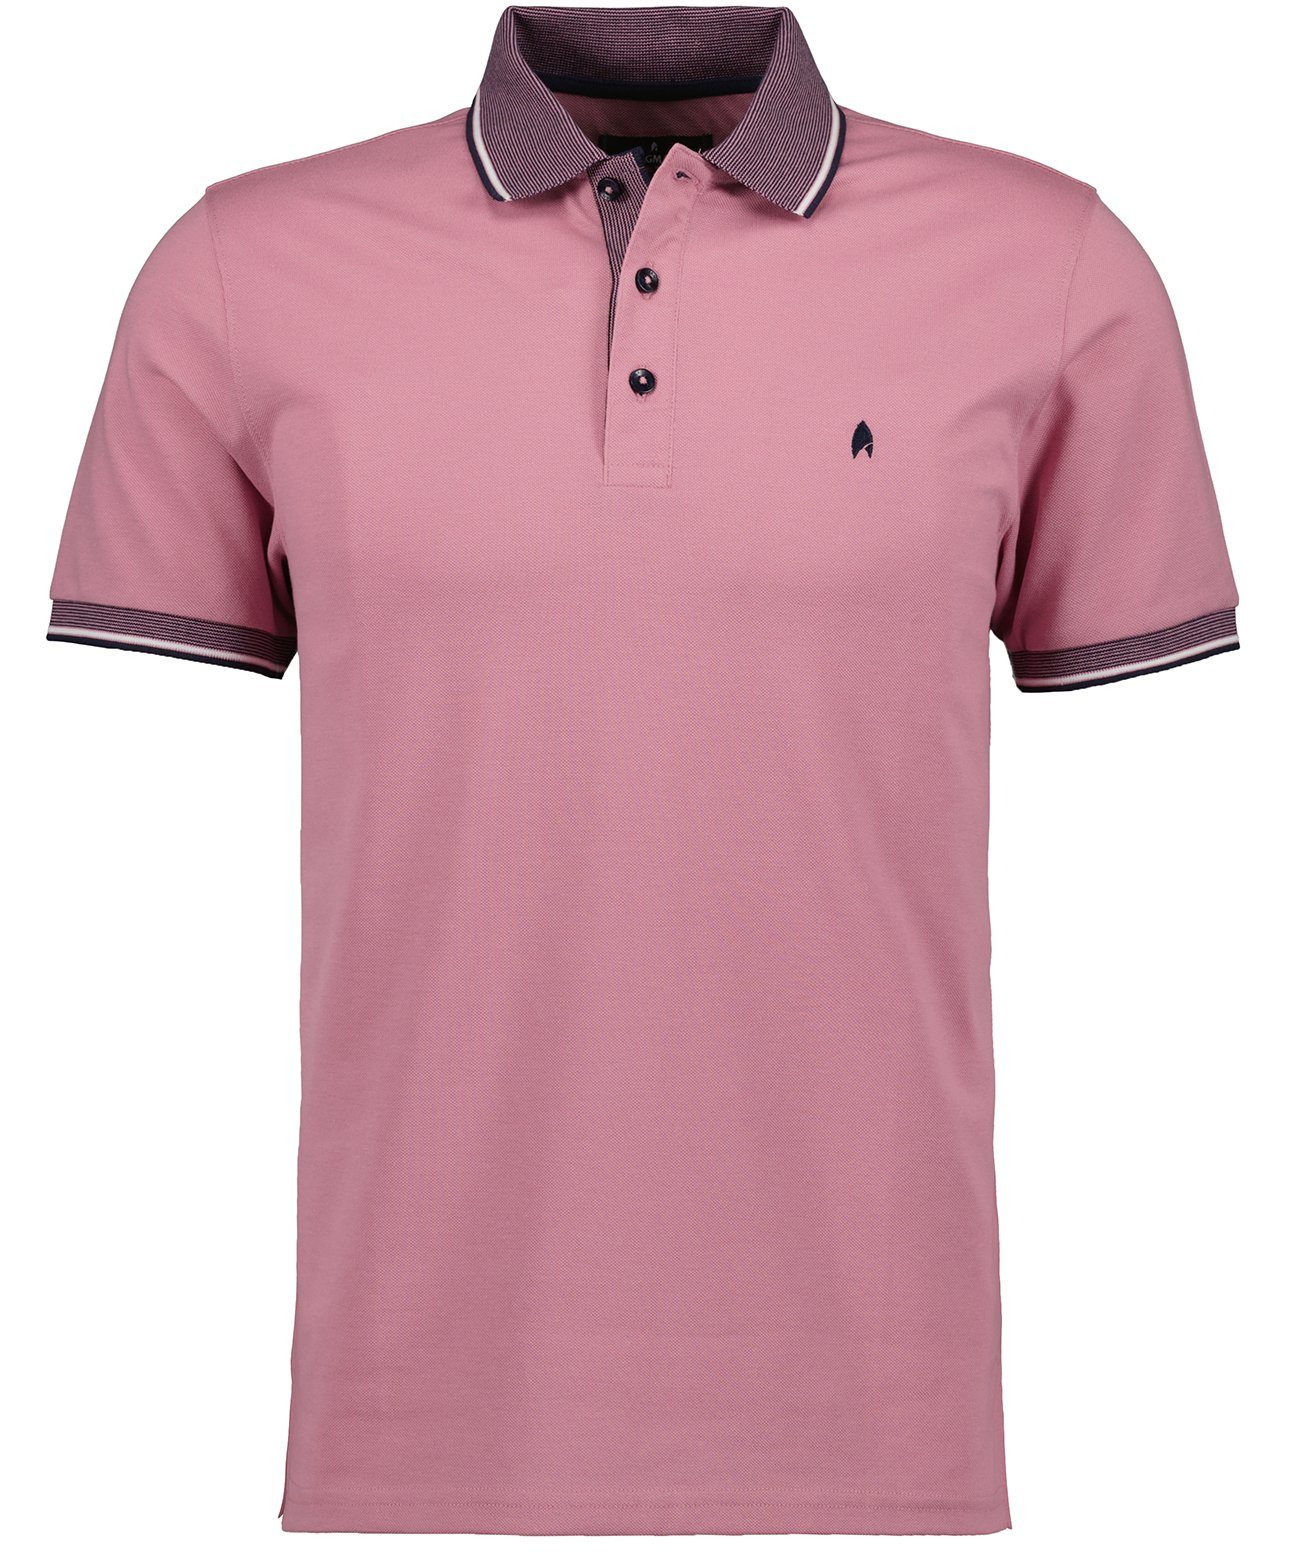 RAGMAN Pink-641 Poloshirt